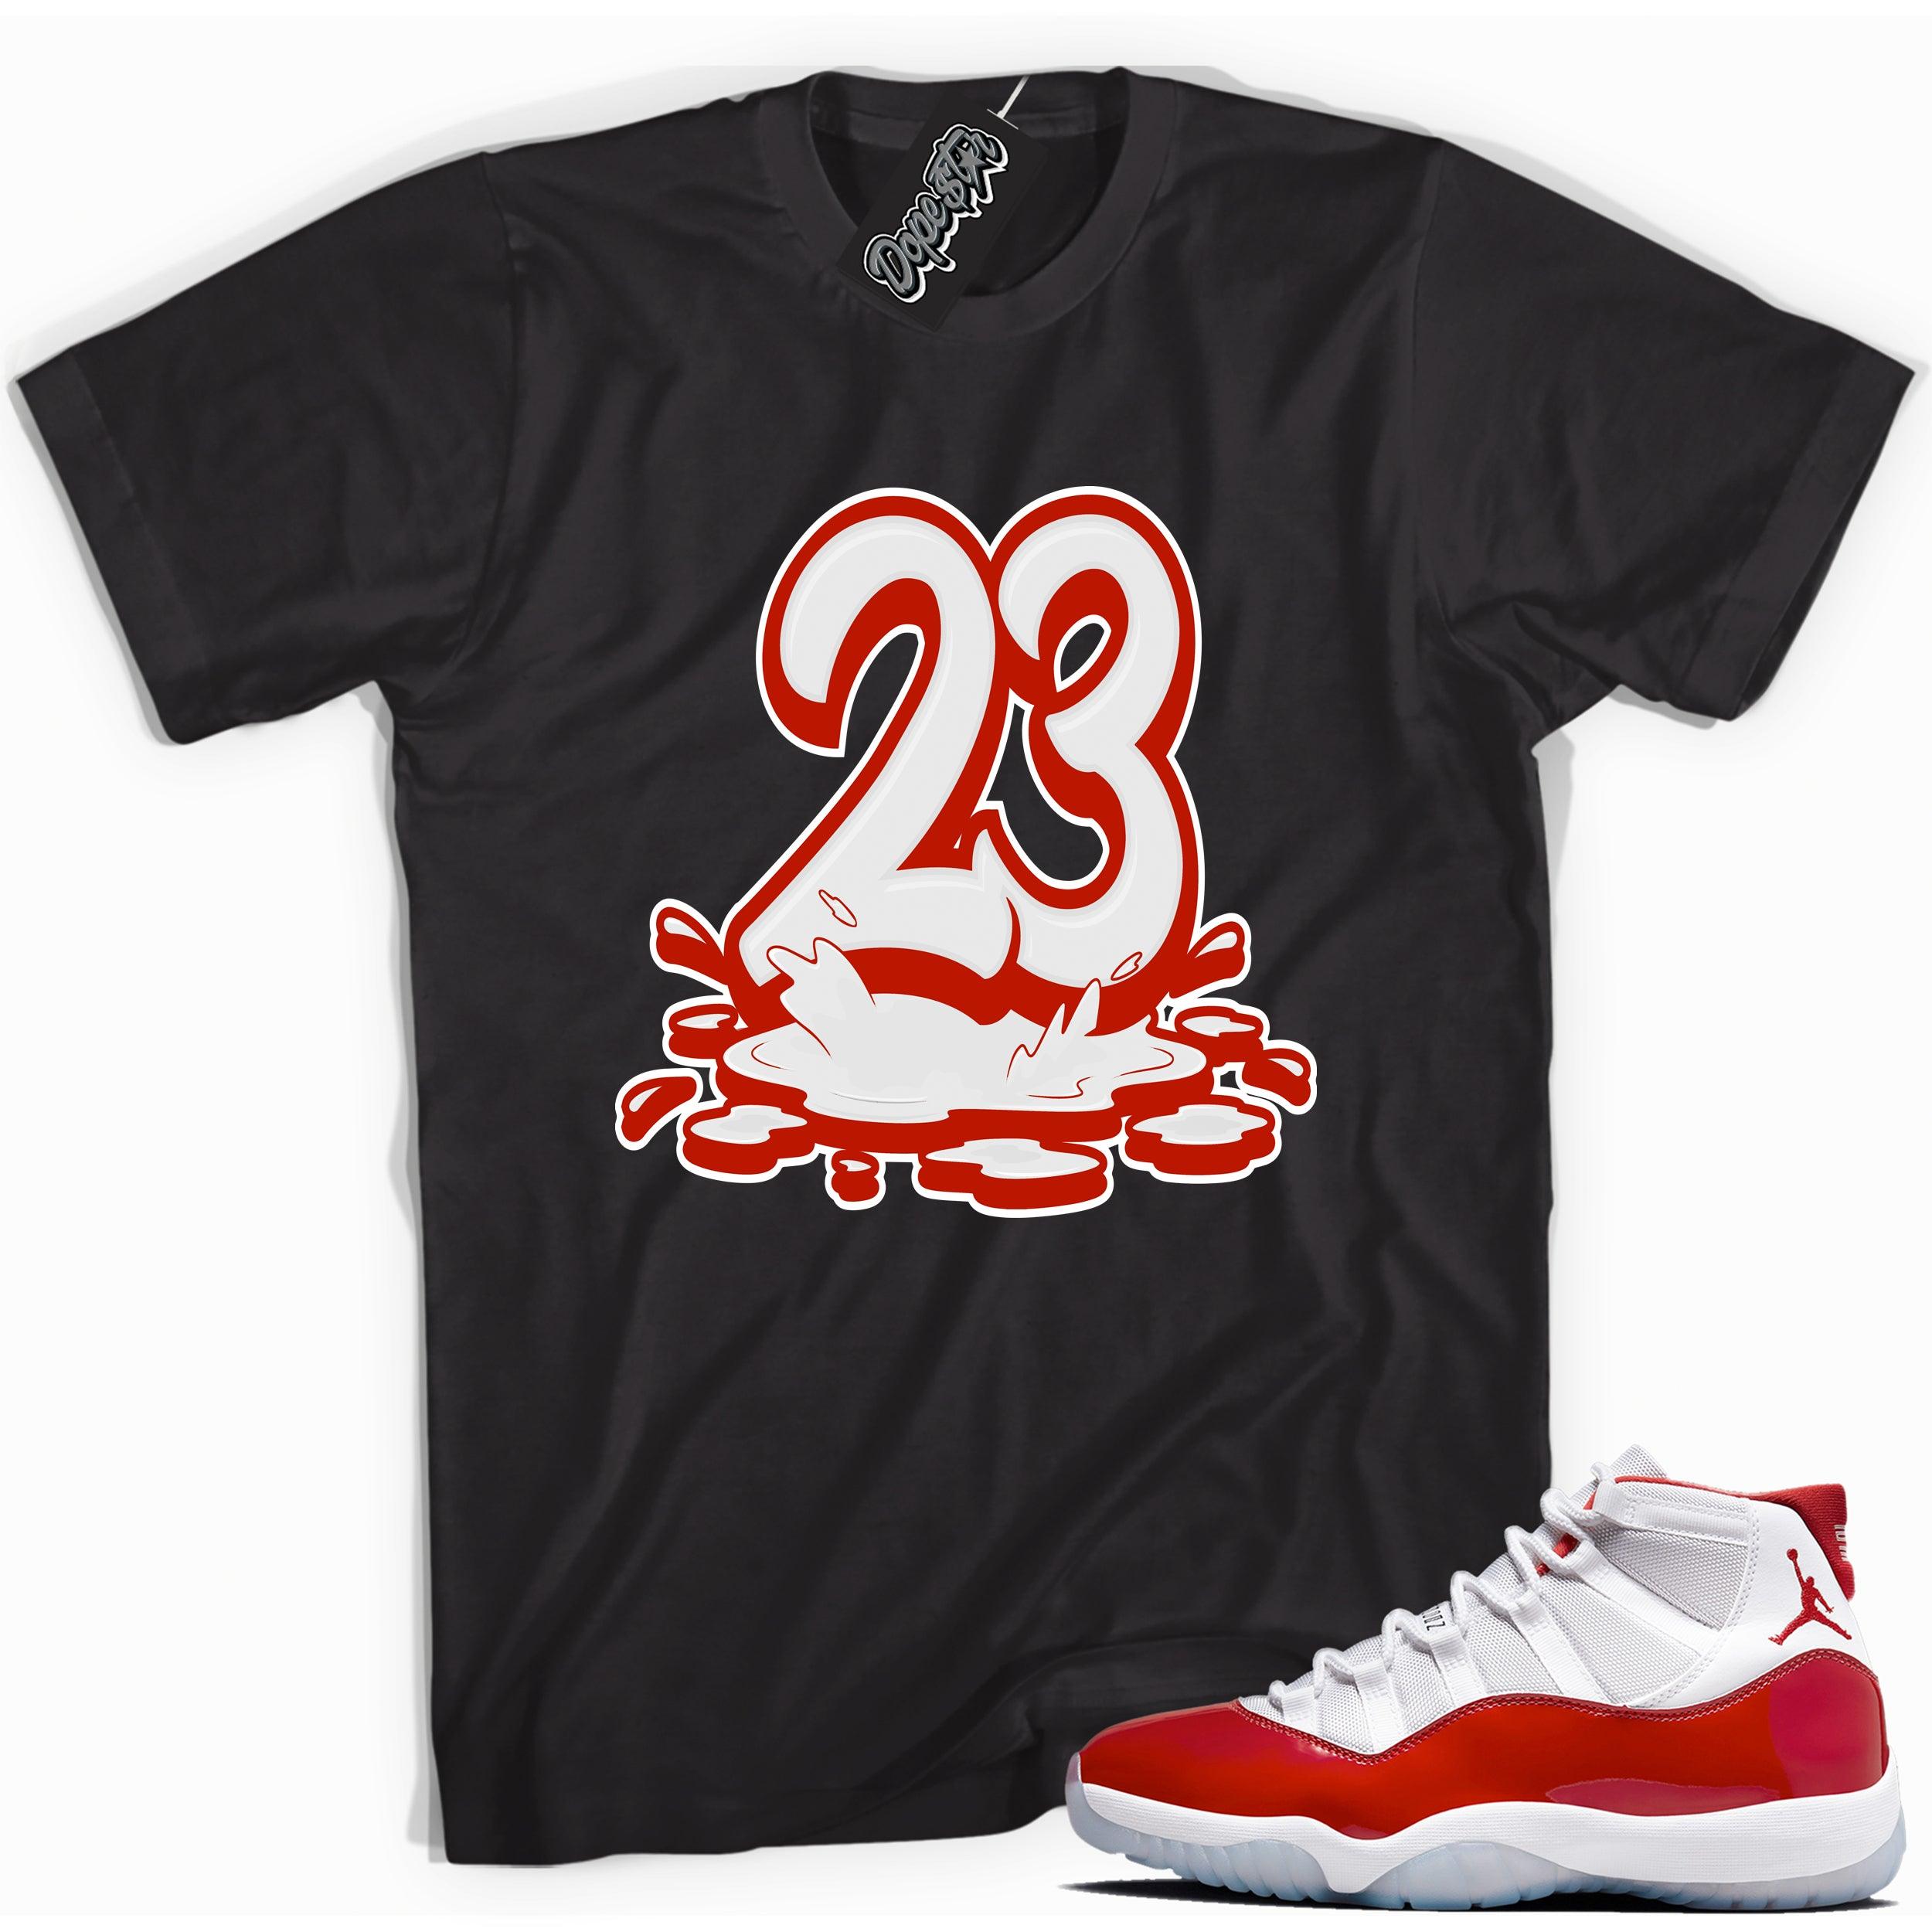 23 Melting Shirt Air Jordan 11 Cherry photo